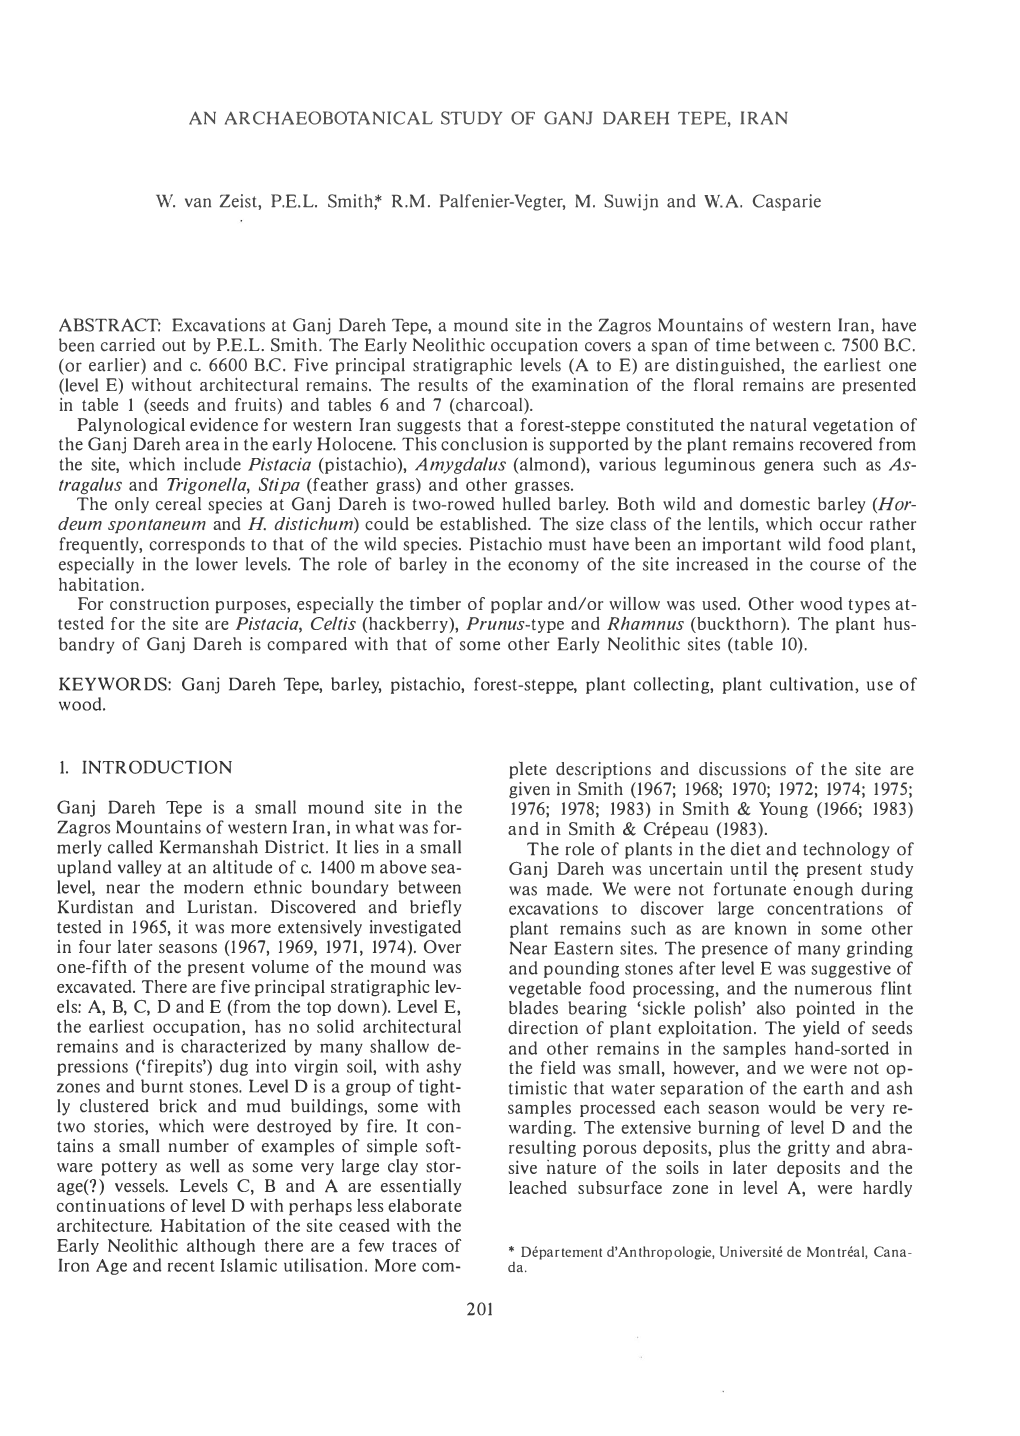 AN ARCHAEOBOTANICAL STUDY of GANJ DAREH TEPE, IRAN W. Van Zeist, P.E.L. Smith R.M. Palfenier-Vegter, M. Suwijn and W.A. Caspa